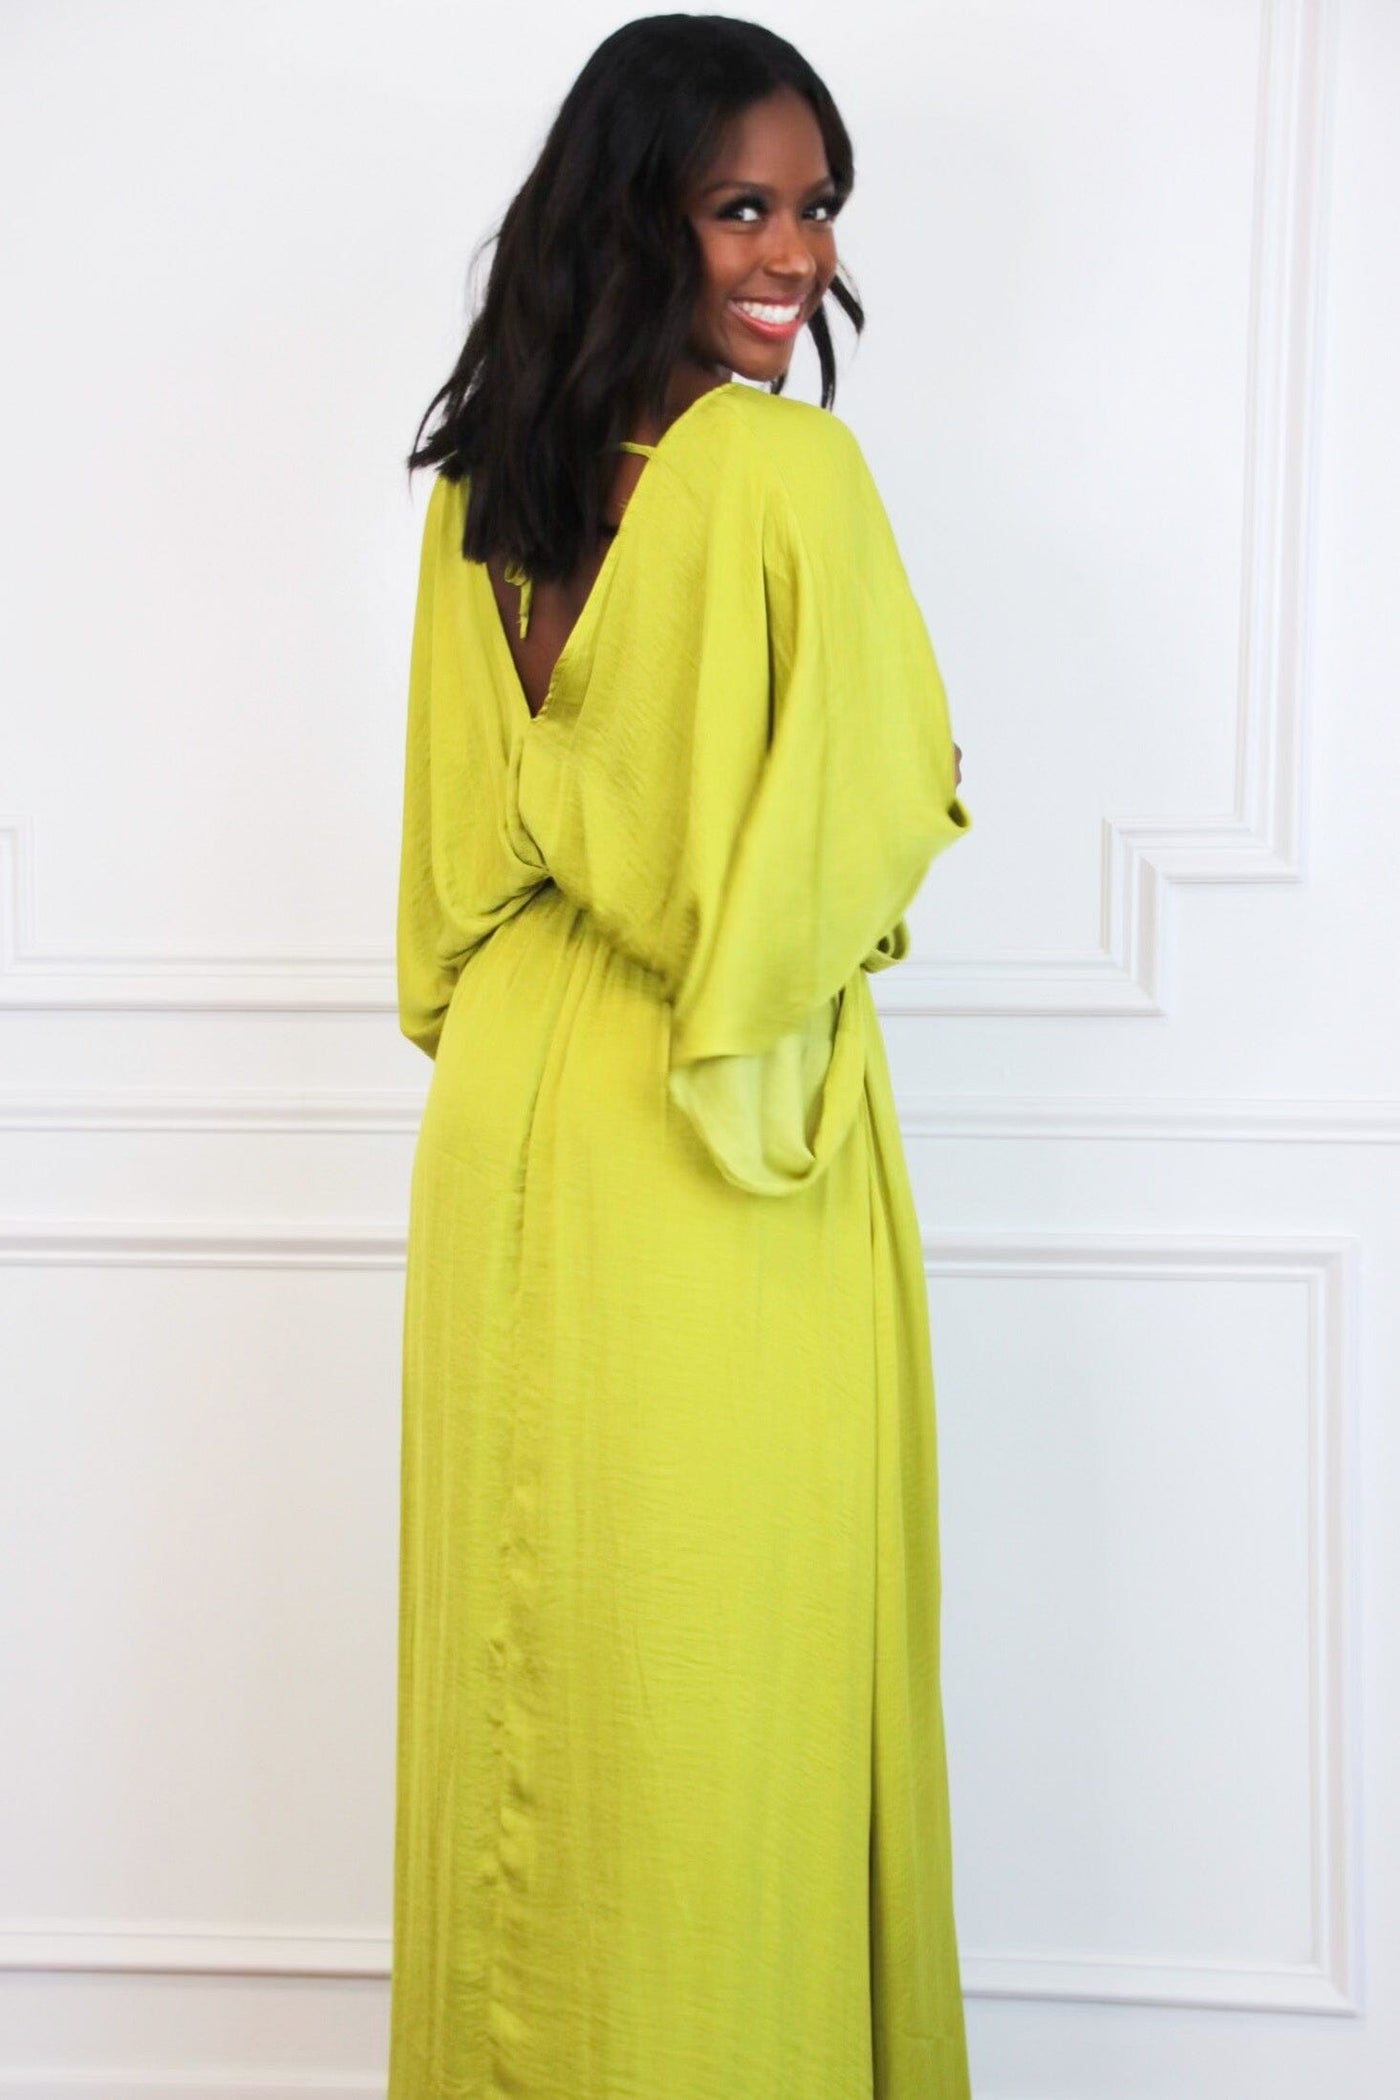 Maricela Kimono Sleeve Maxi Dress: Lime - Bella and Bloom Boutique